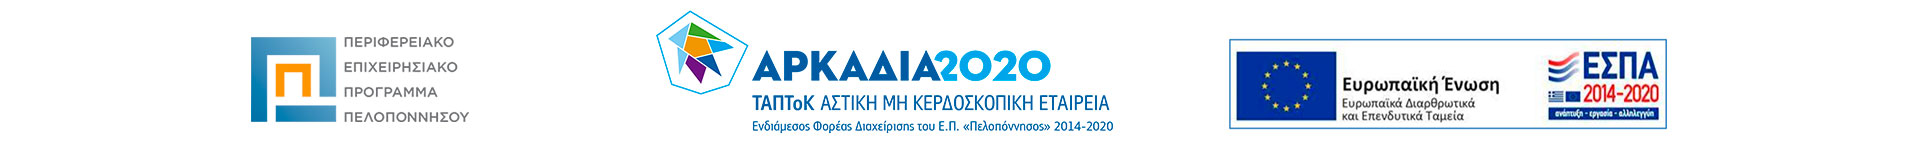 Arkadia2020 Λογότυπο